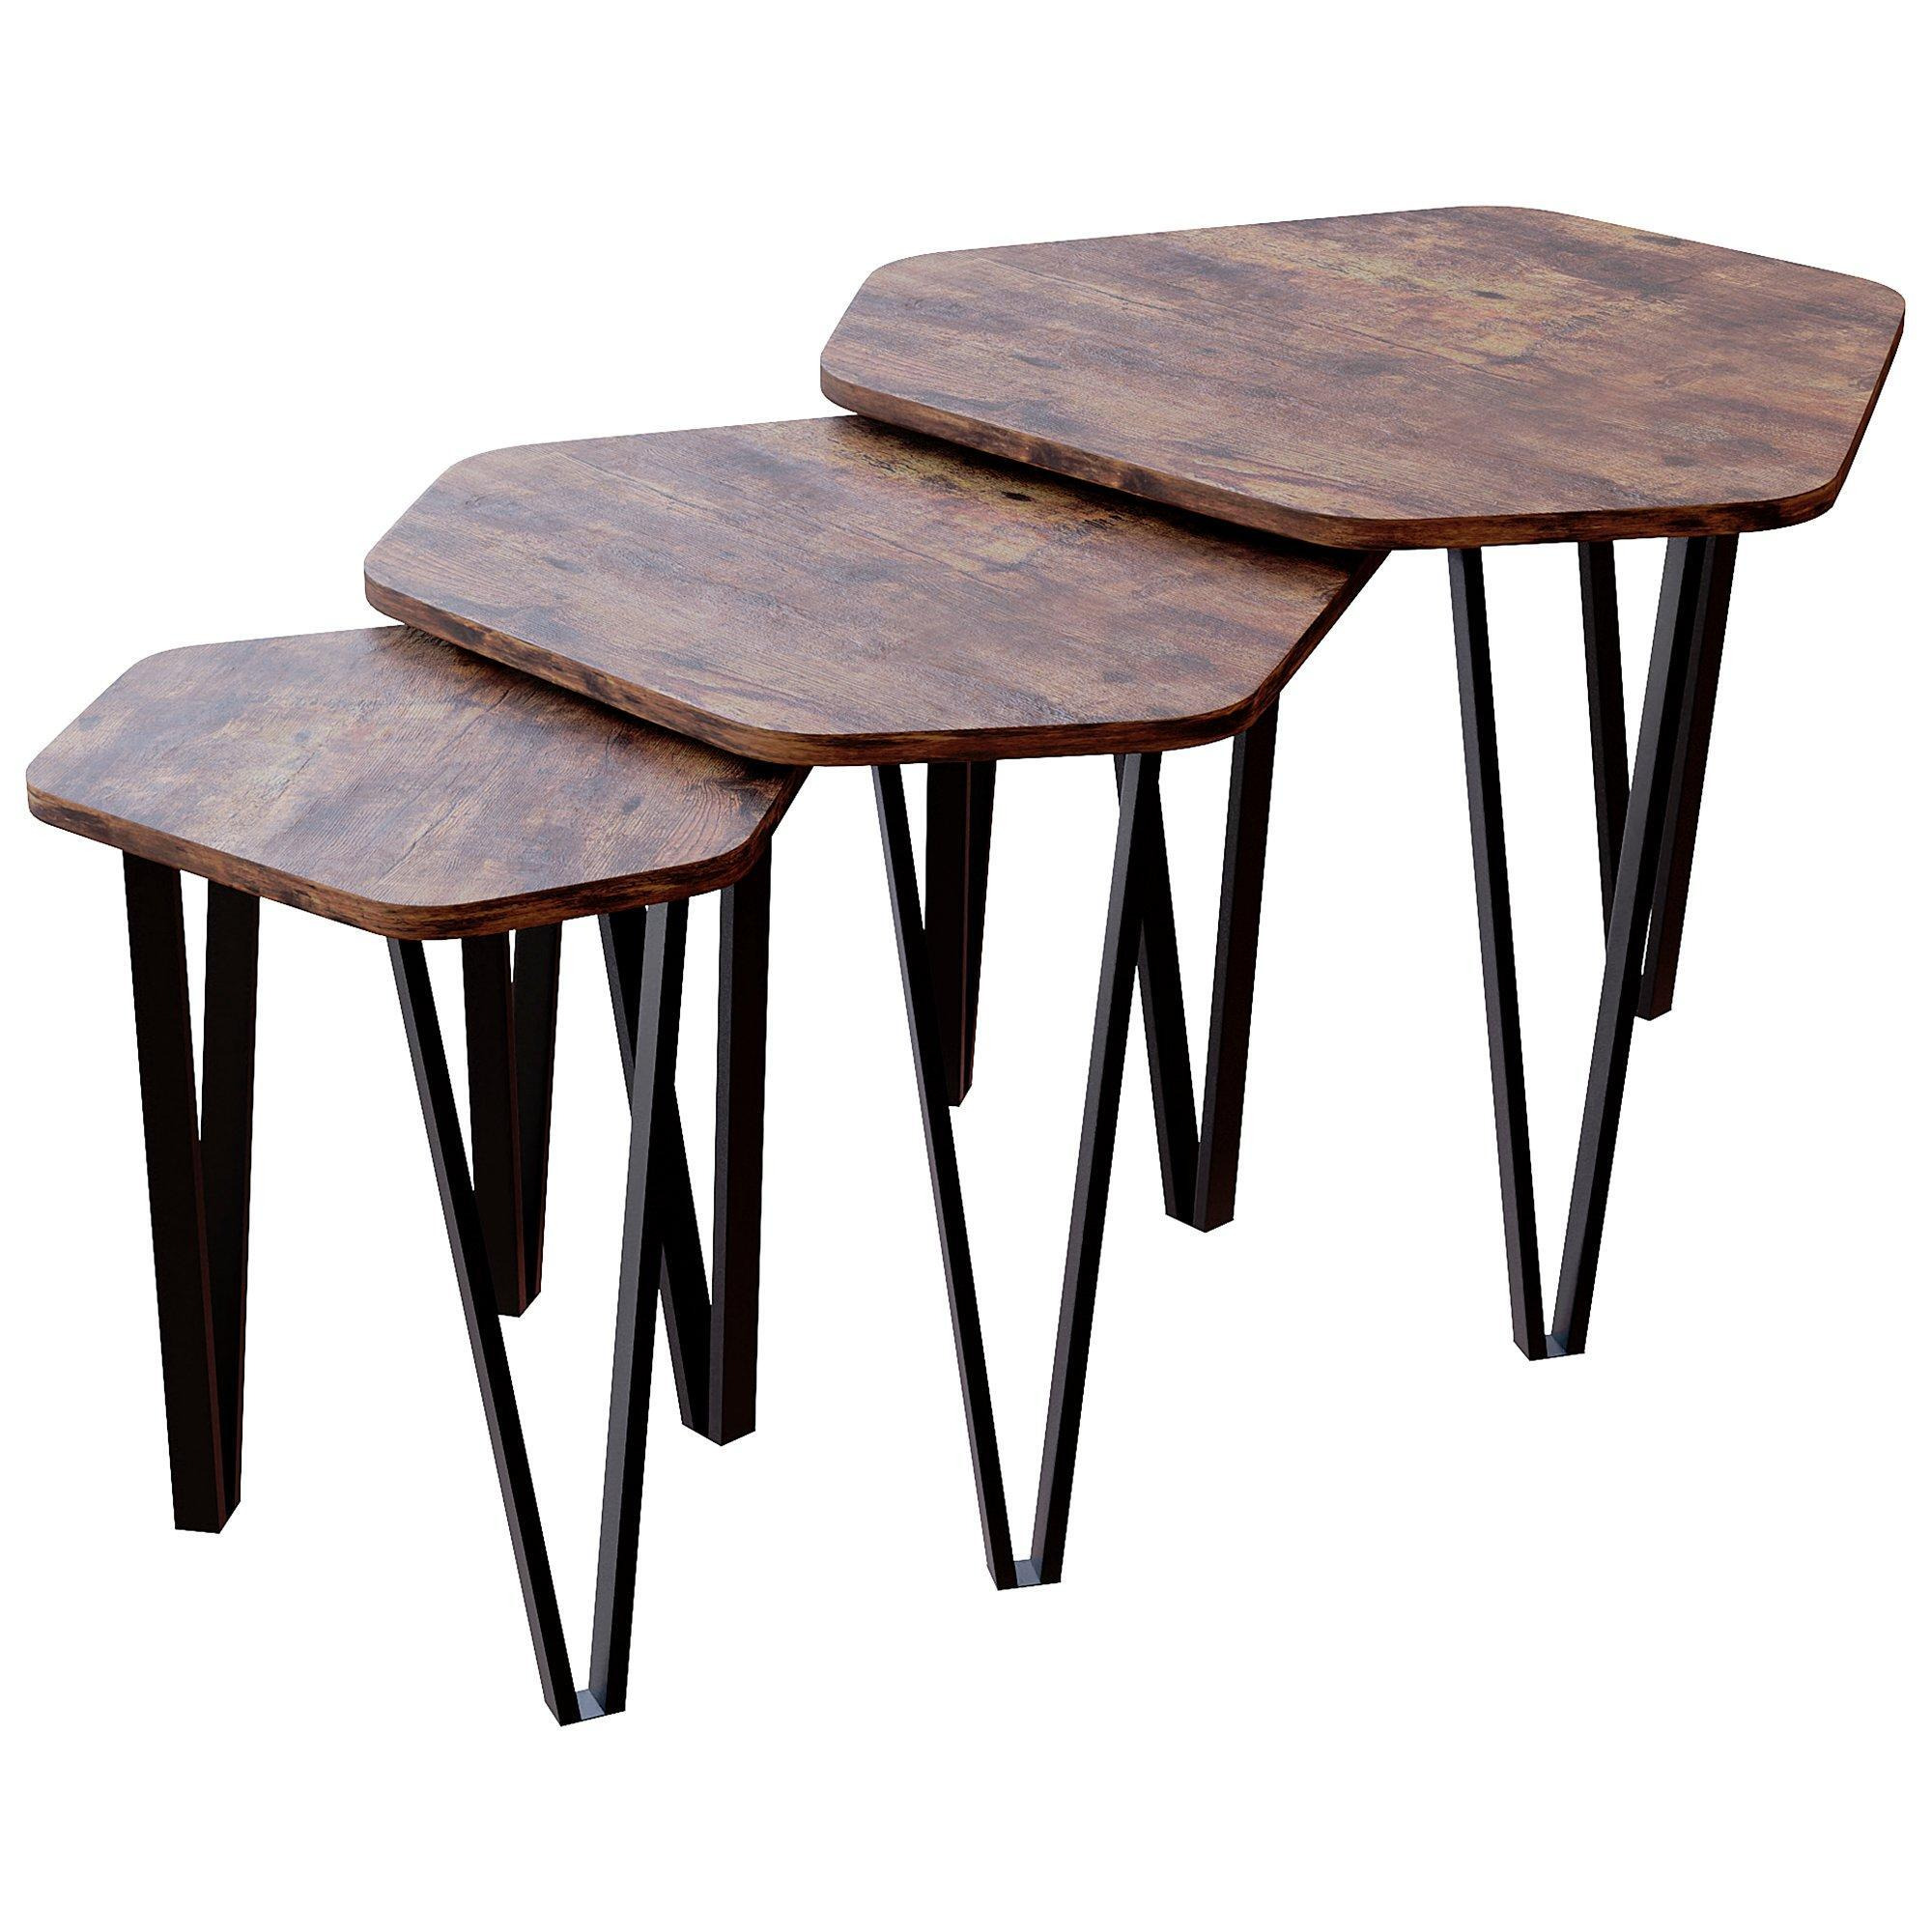 Vida Designs Brooklyn Nest of 3 Tables Set Of 3 MDF Living Room Coffee Side Table Furniture - image 1